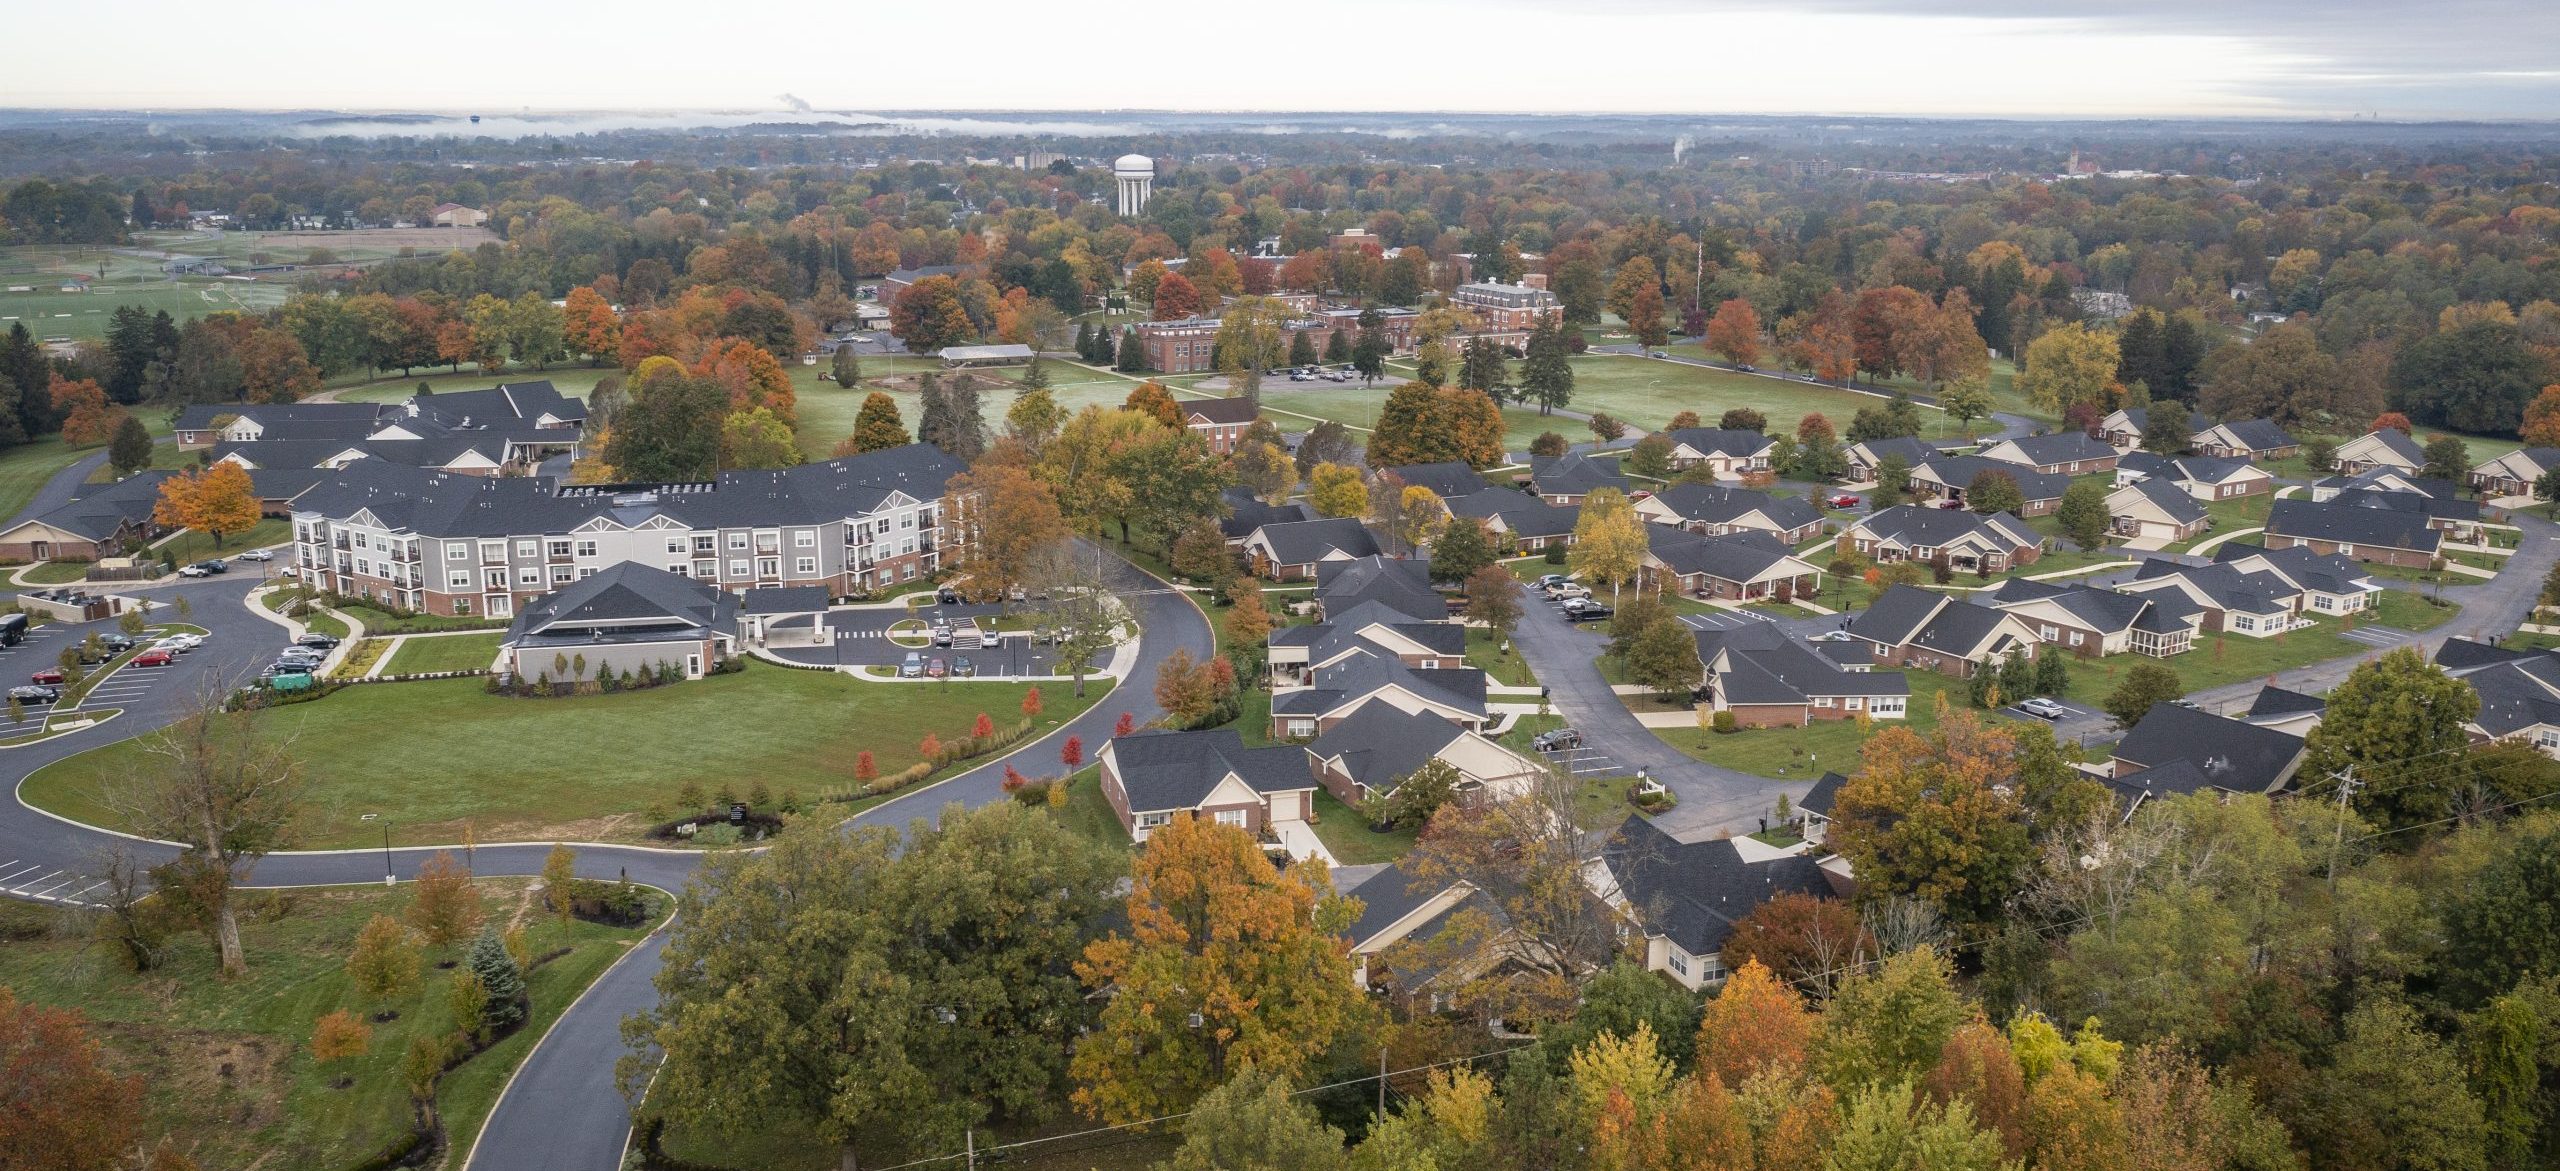 Drone shot of Legacy Village campus